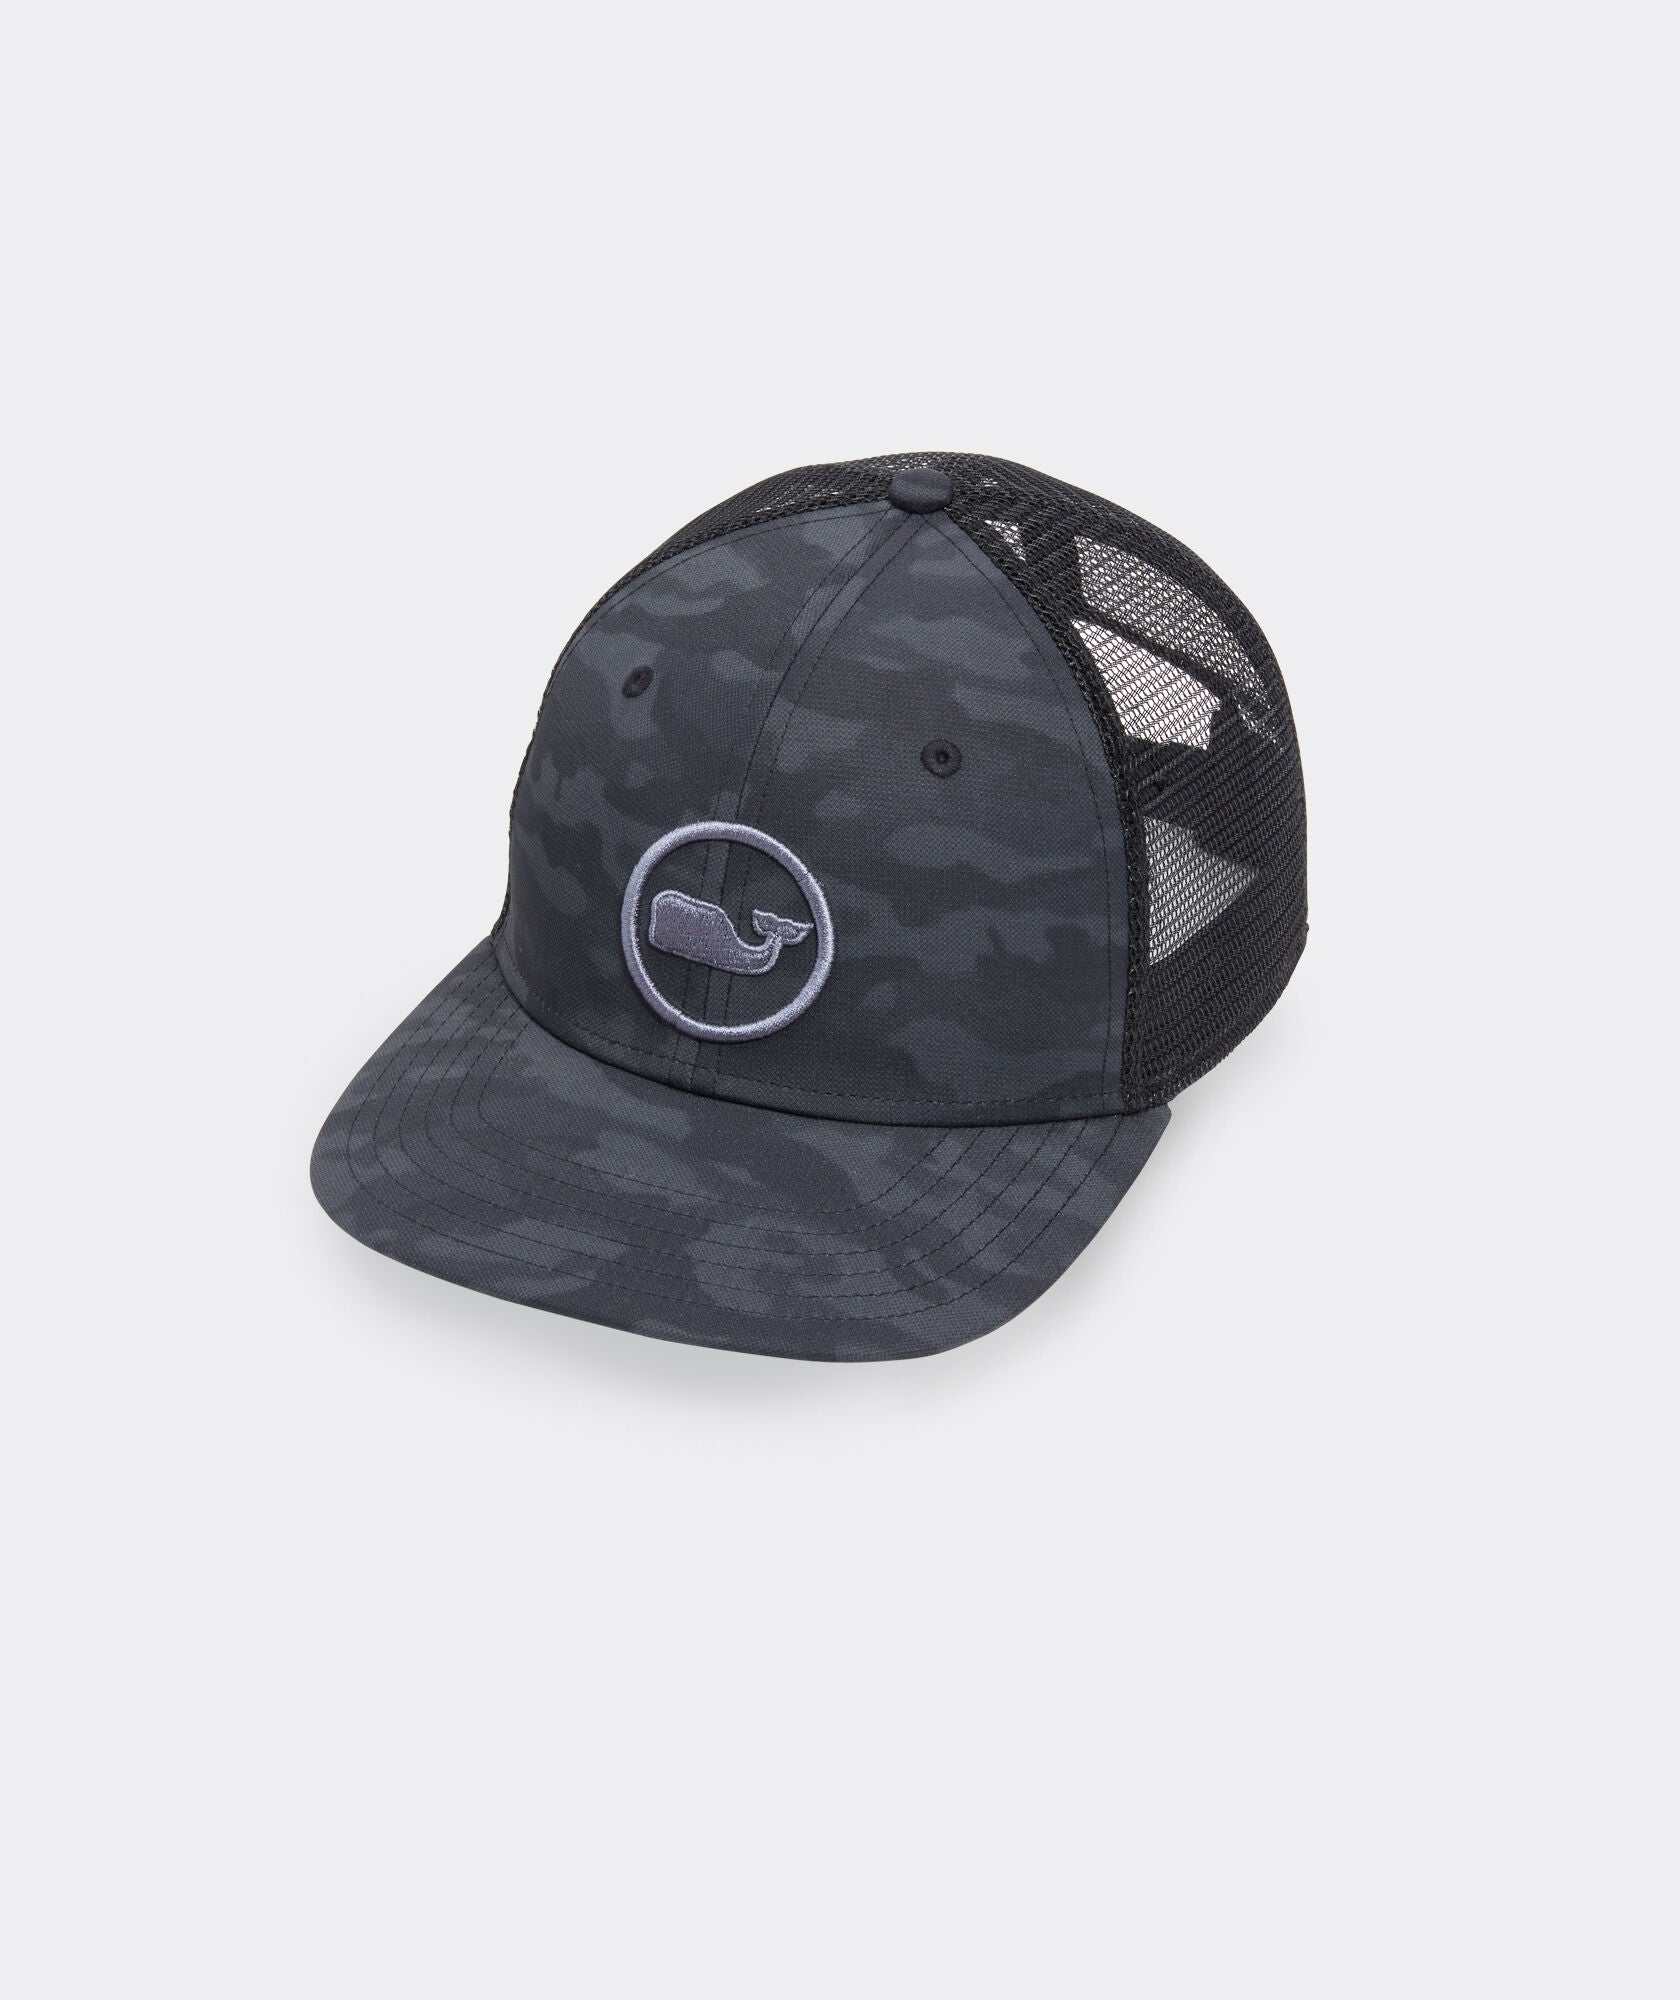 Vineyard Vines Gray Camo Whale Dot Trucker Hat.